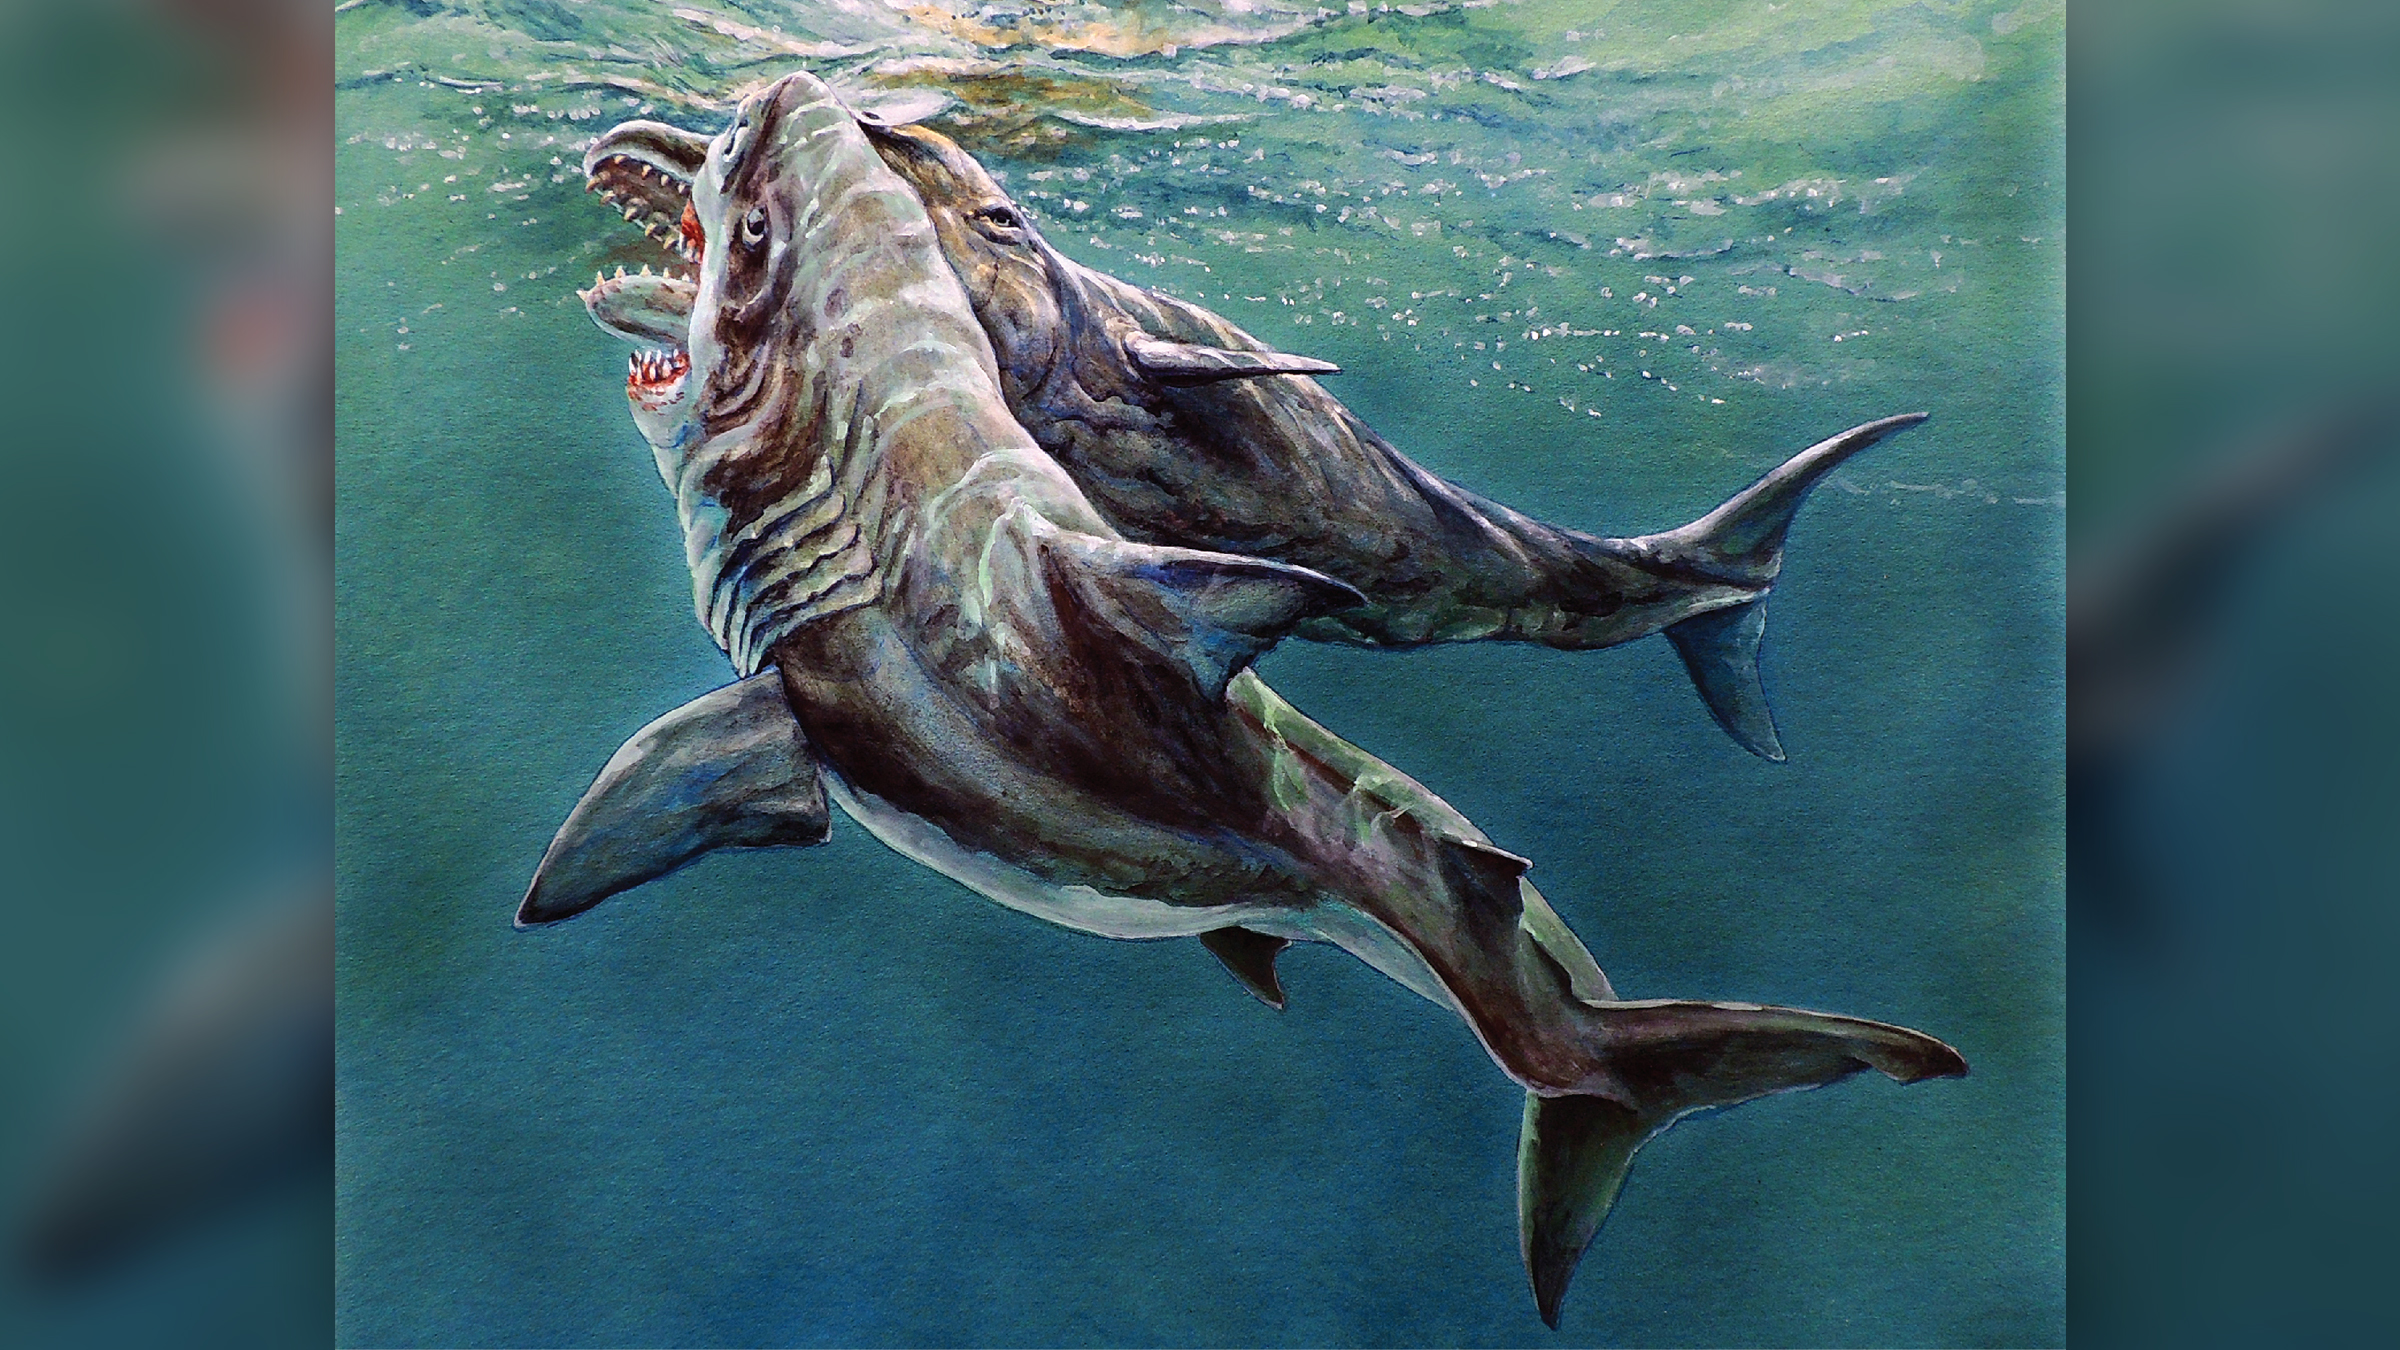 The megatoothed shark's serrated teeth left gouge marks.